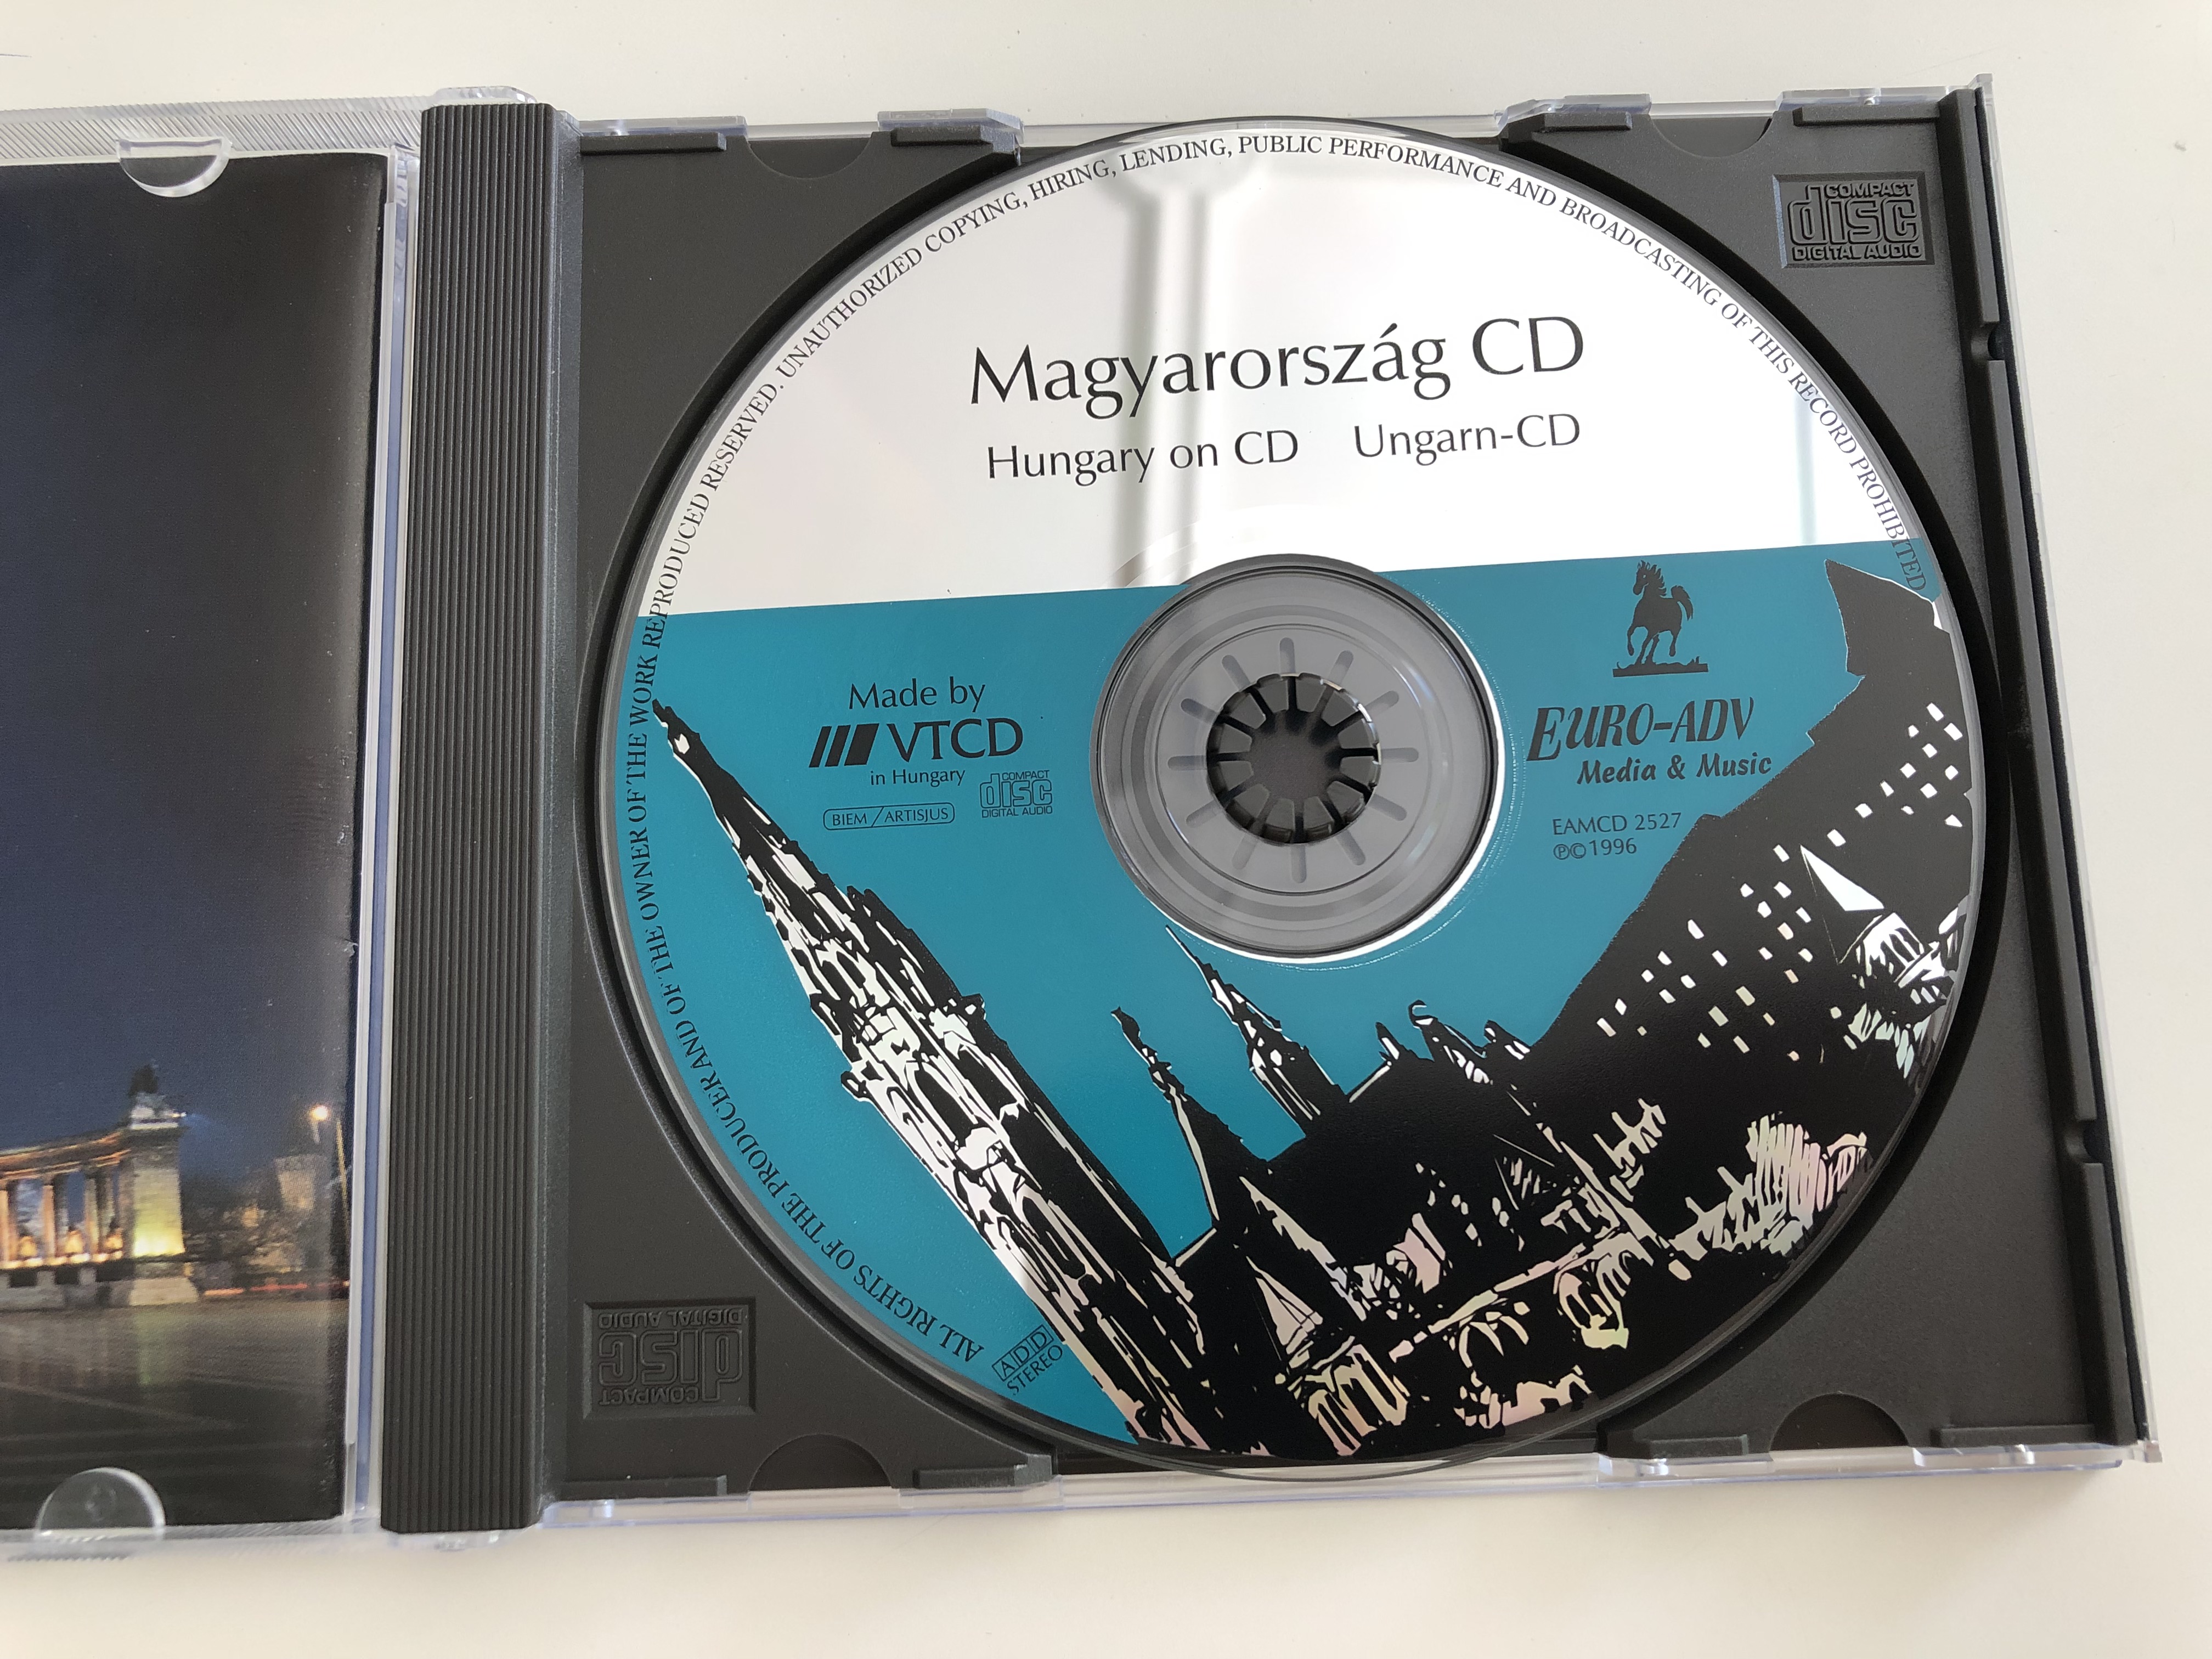 magyarorsz-g-cd-hungary-on-cd-ungarn-cd-magyarorsz-g-hangulata-zen-ben-s-k-pekben-hungary-s-atmosphere-in-music-and-pictures-eamcd-2527-audio-cd-1996-8-.jpg